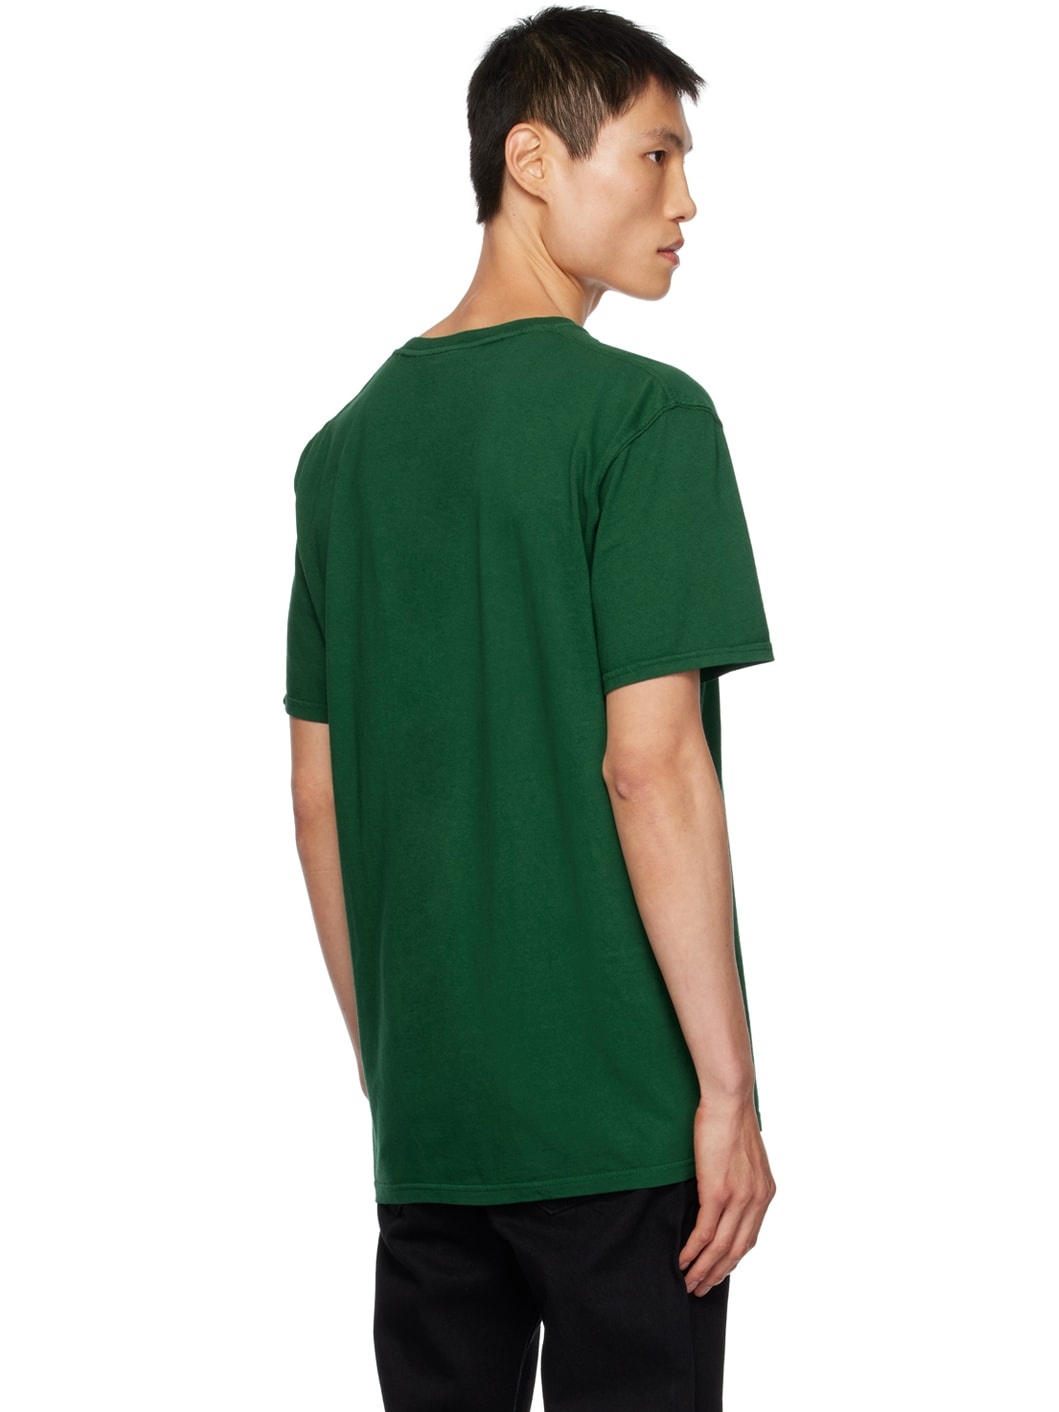 Green Pocket T-Shirt - 3